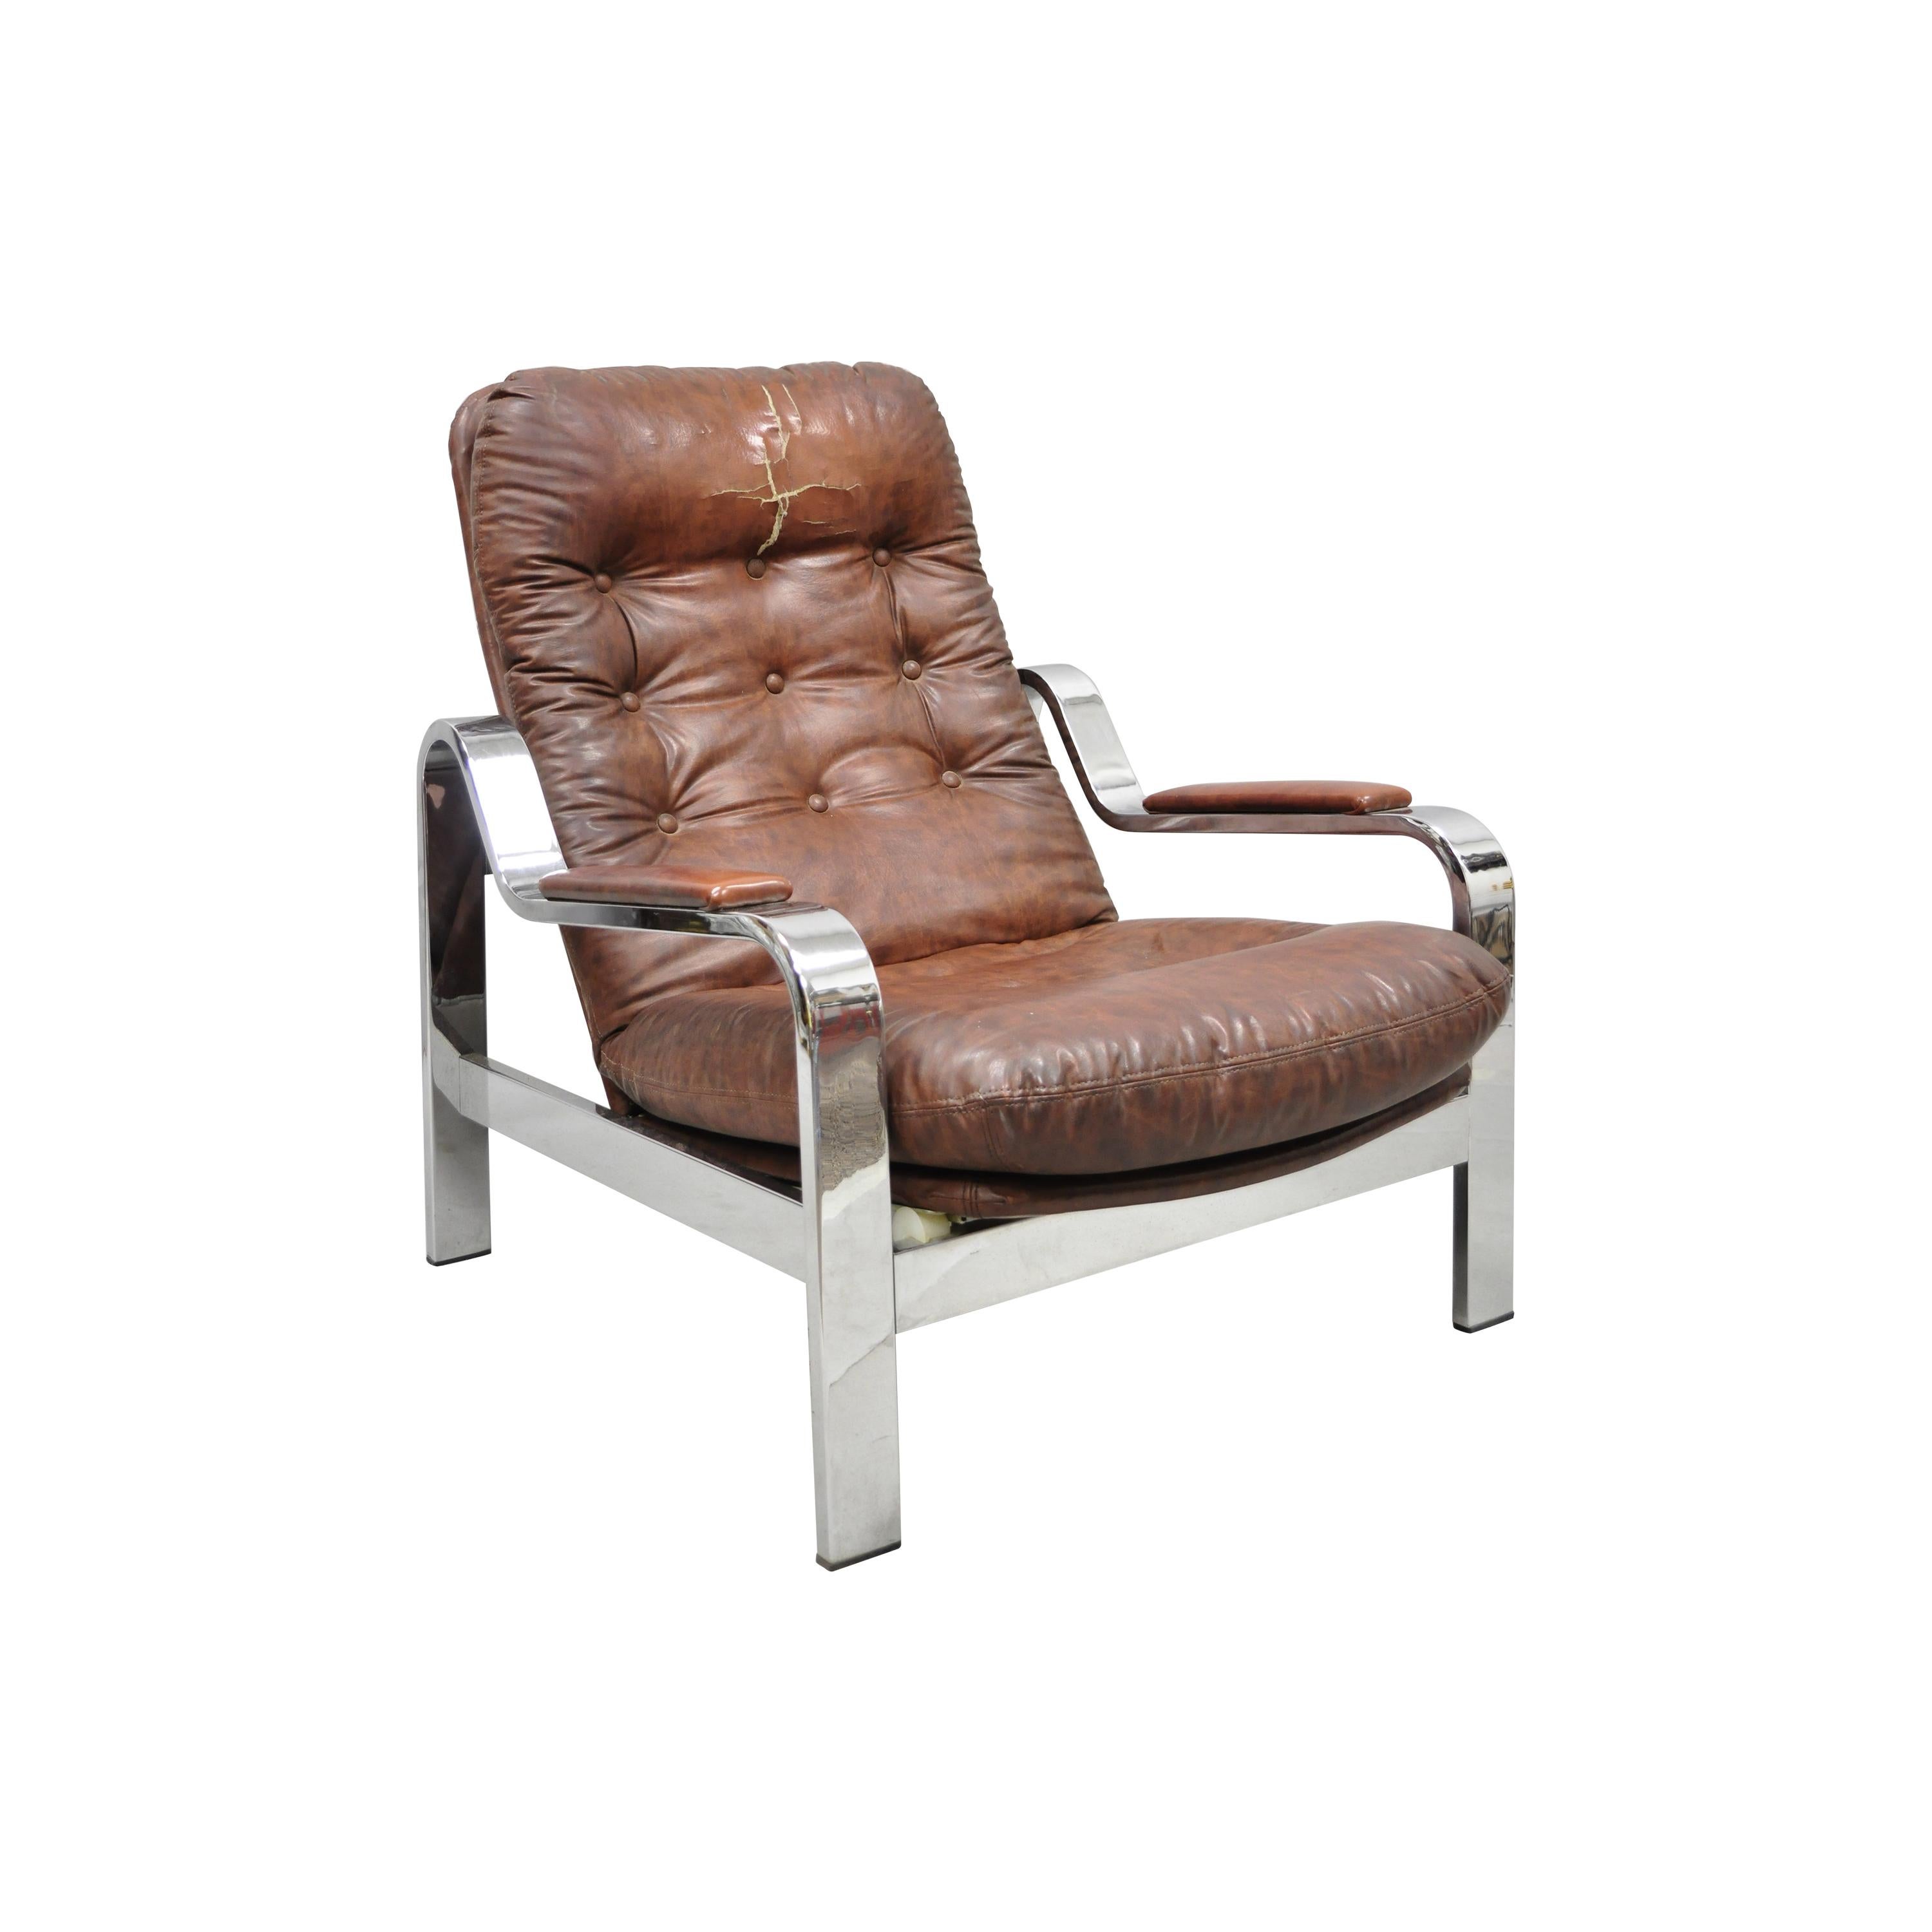 Midcentury Italian Modern Selig Chrom Reclining Recliner Lounge Chair